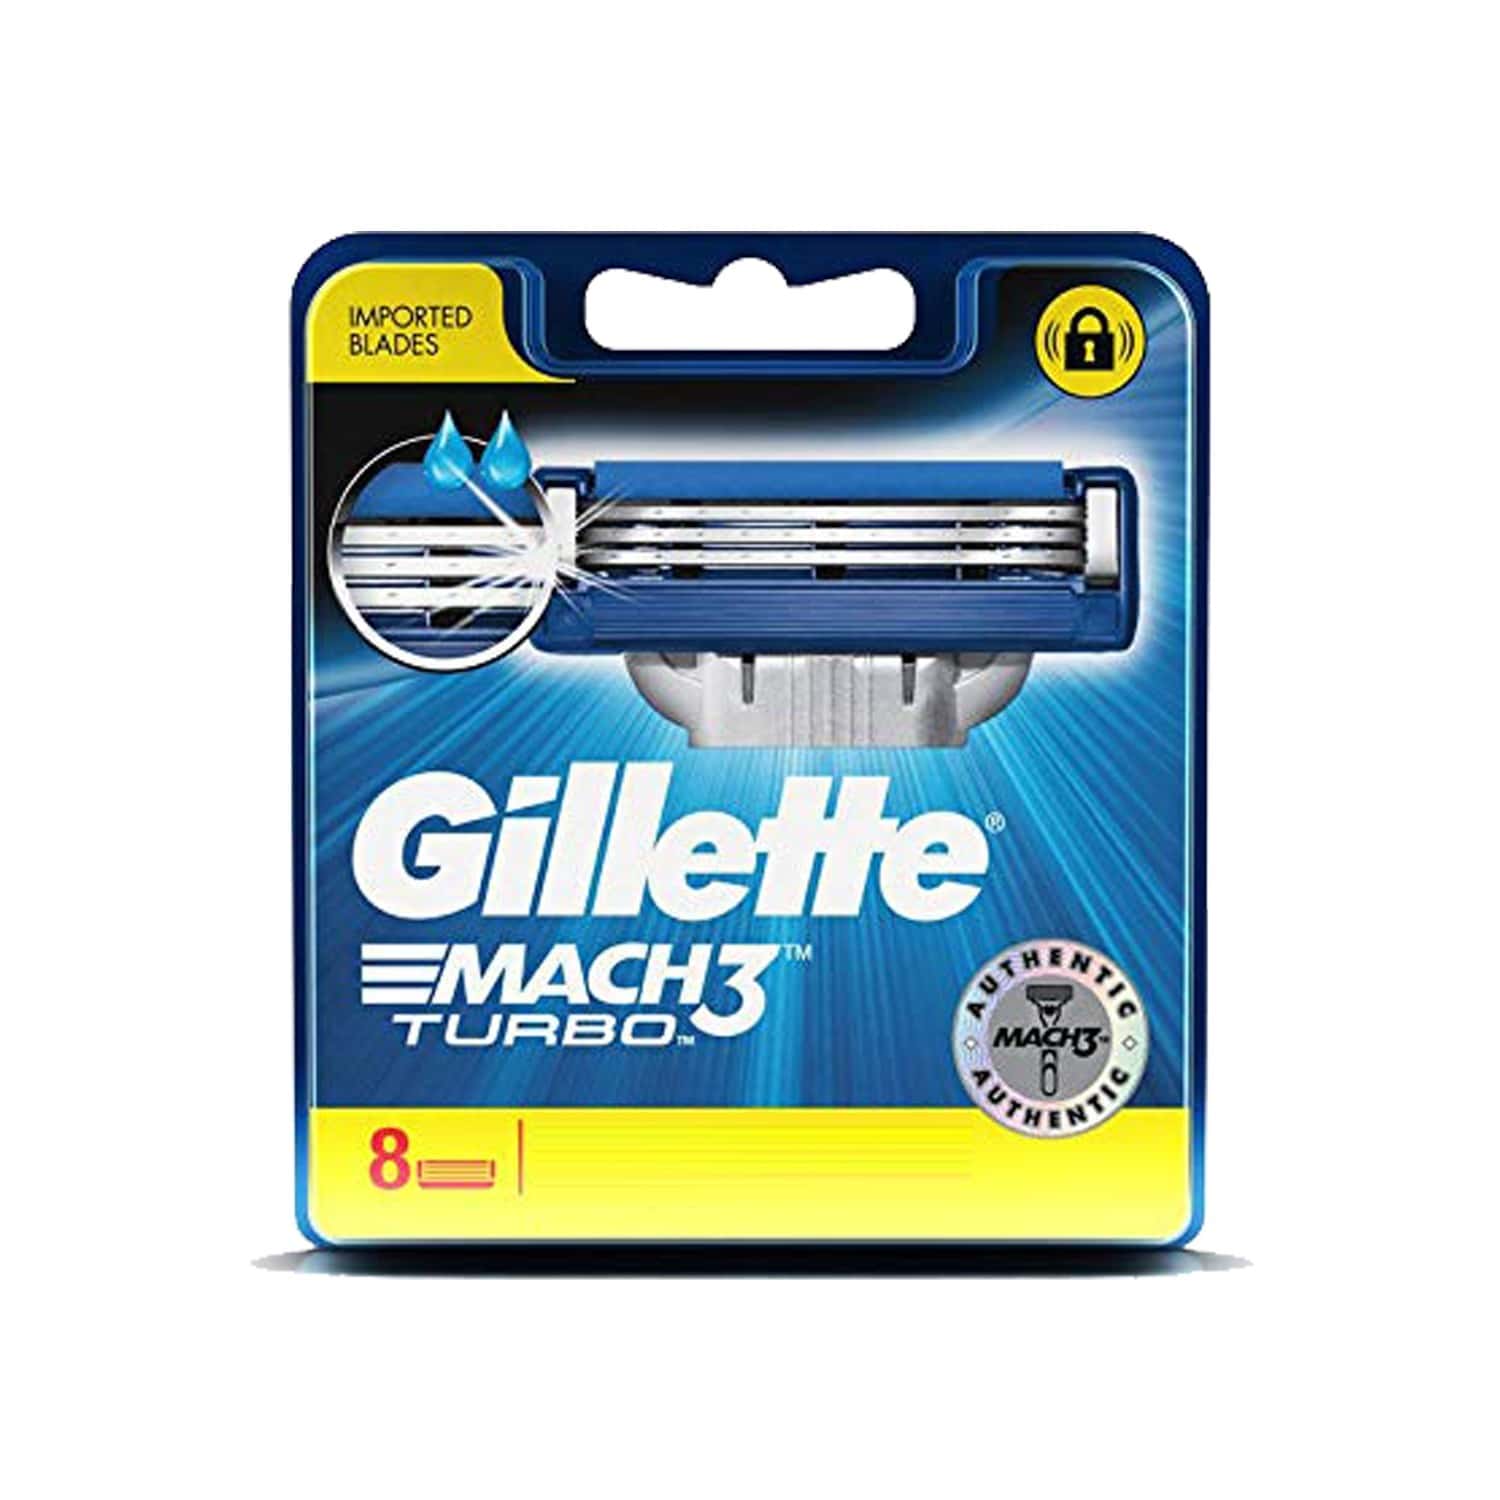 Gillette Mach 3 Turbo Manual Shaving Razor Blades - 8s Pack (cartridge ...